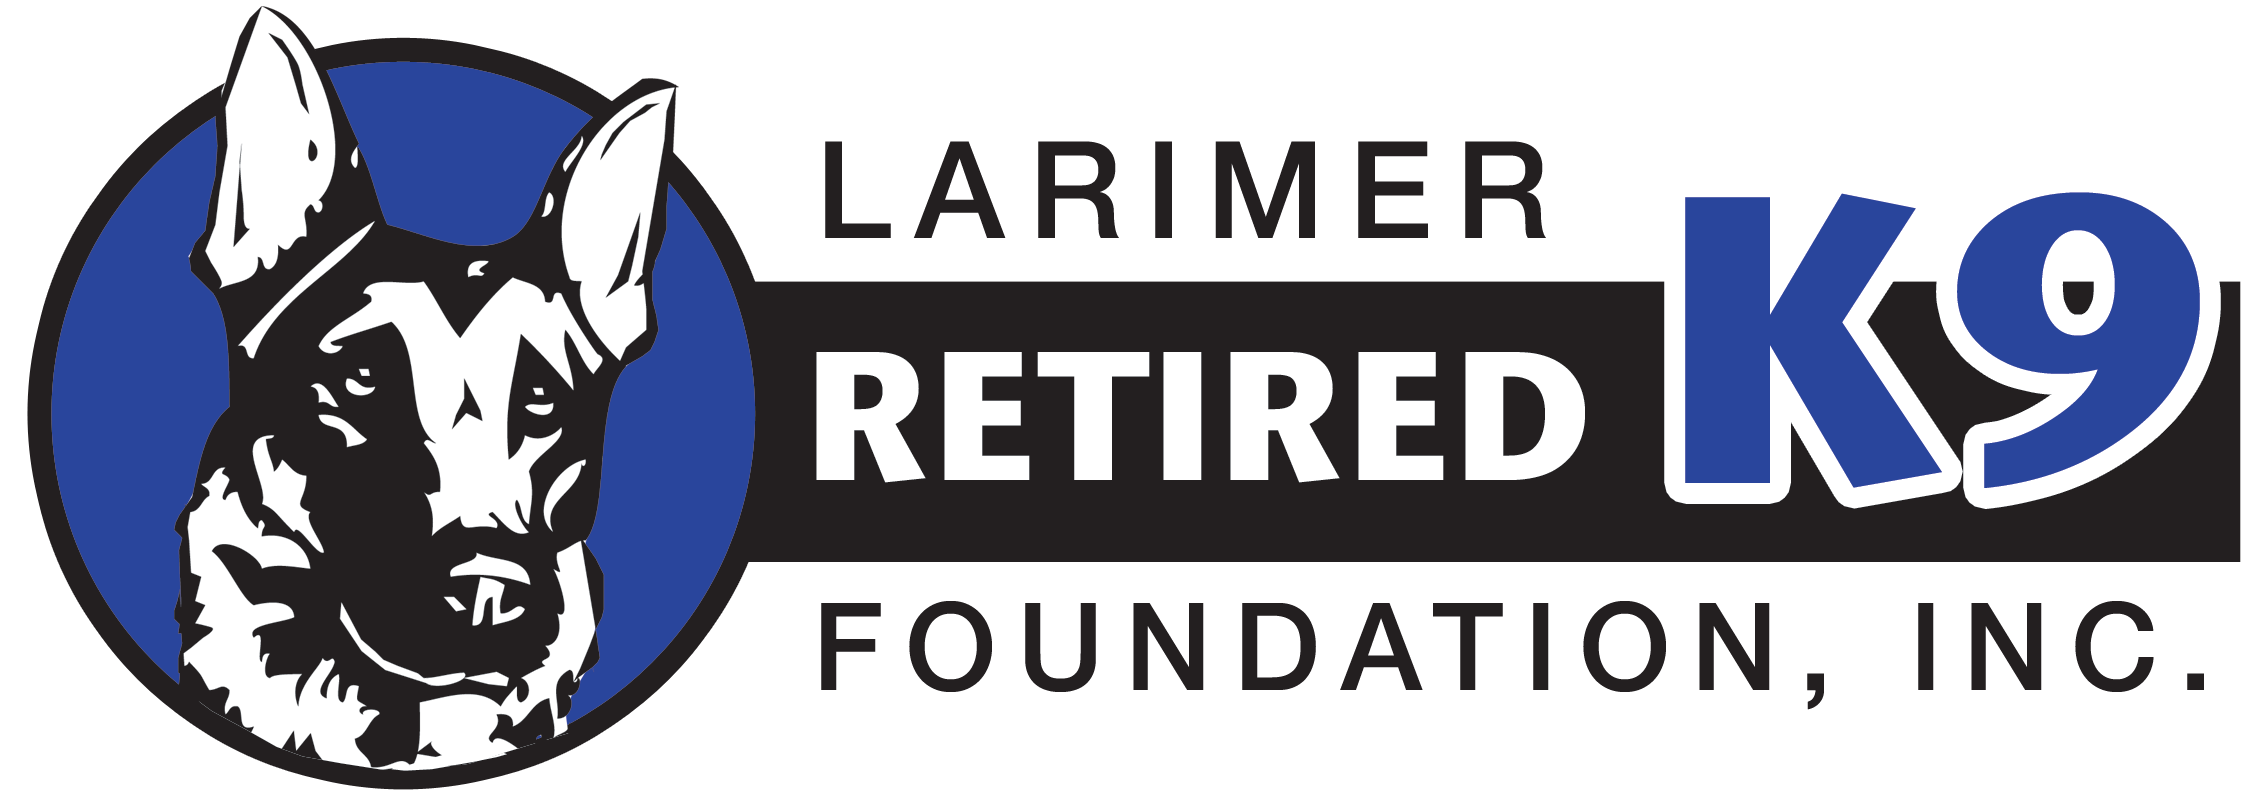 Larimer Retired K9 Foundation